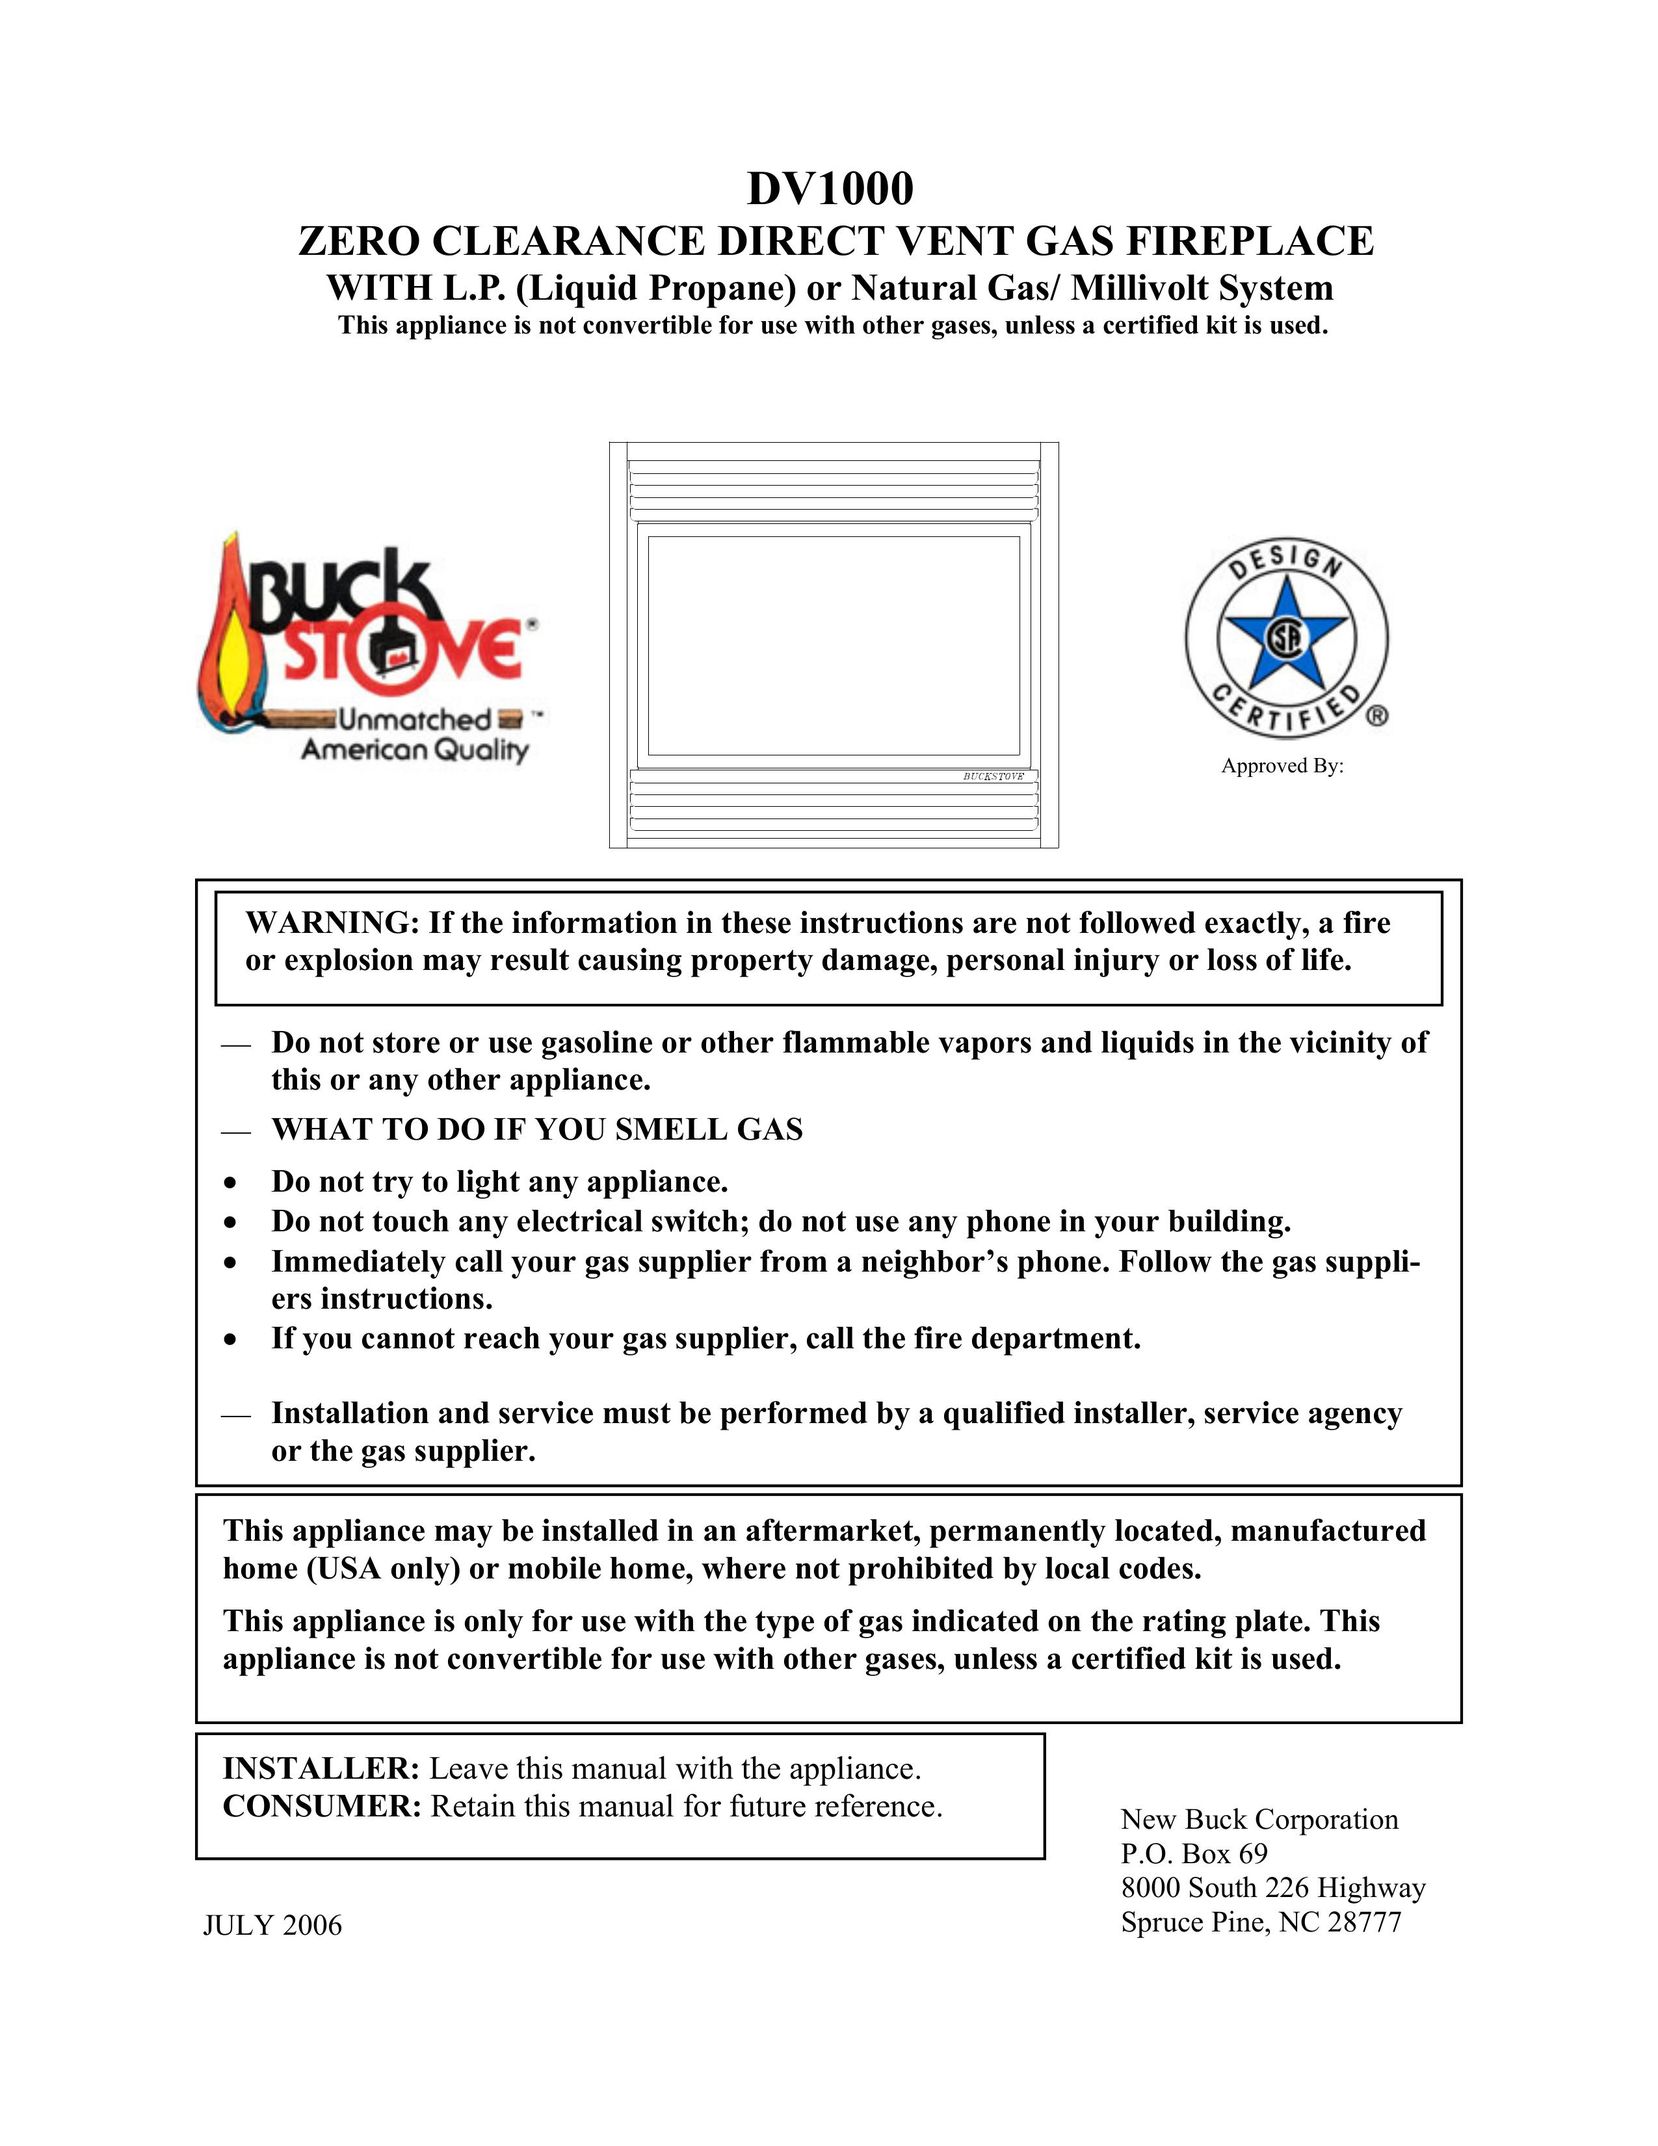 New Buck Corporation DV1000 Indoor Fireplace User Manual